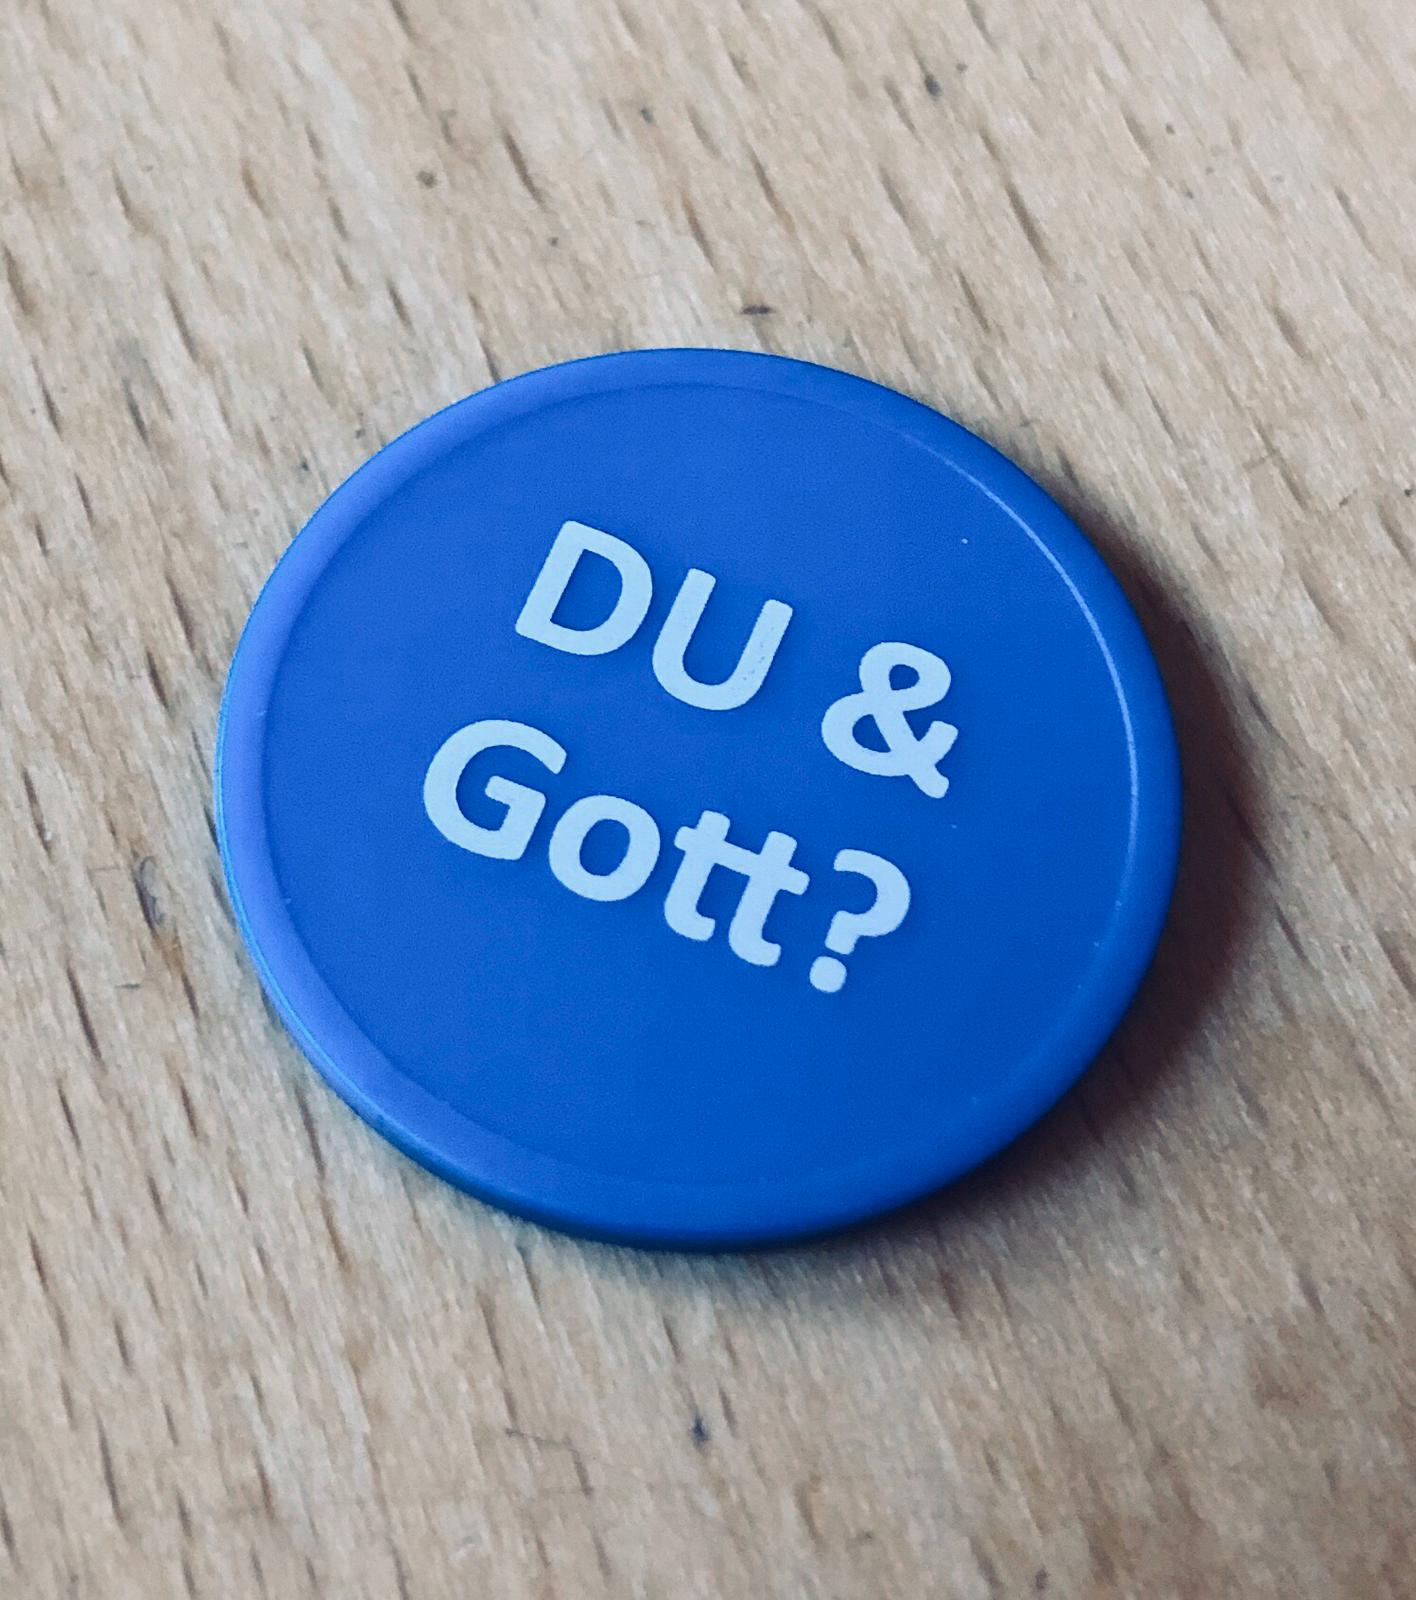 DU & Gott